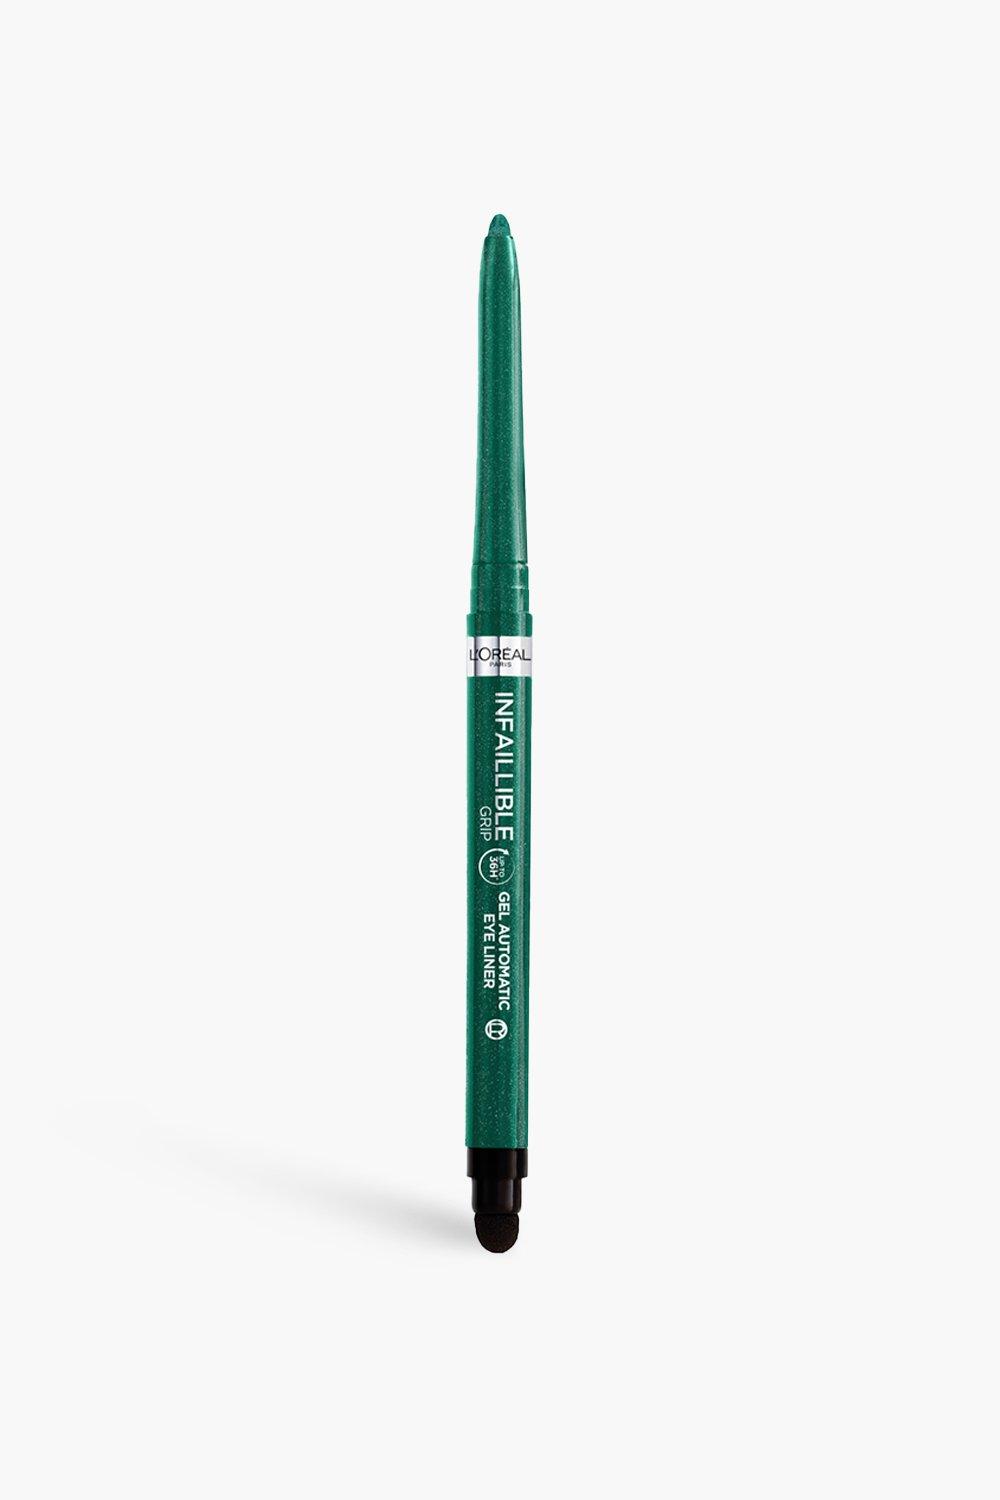 L'Oreal Paris Infallible Grip 36H Gel Automatic Eyeliner, Green